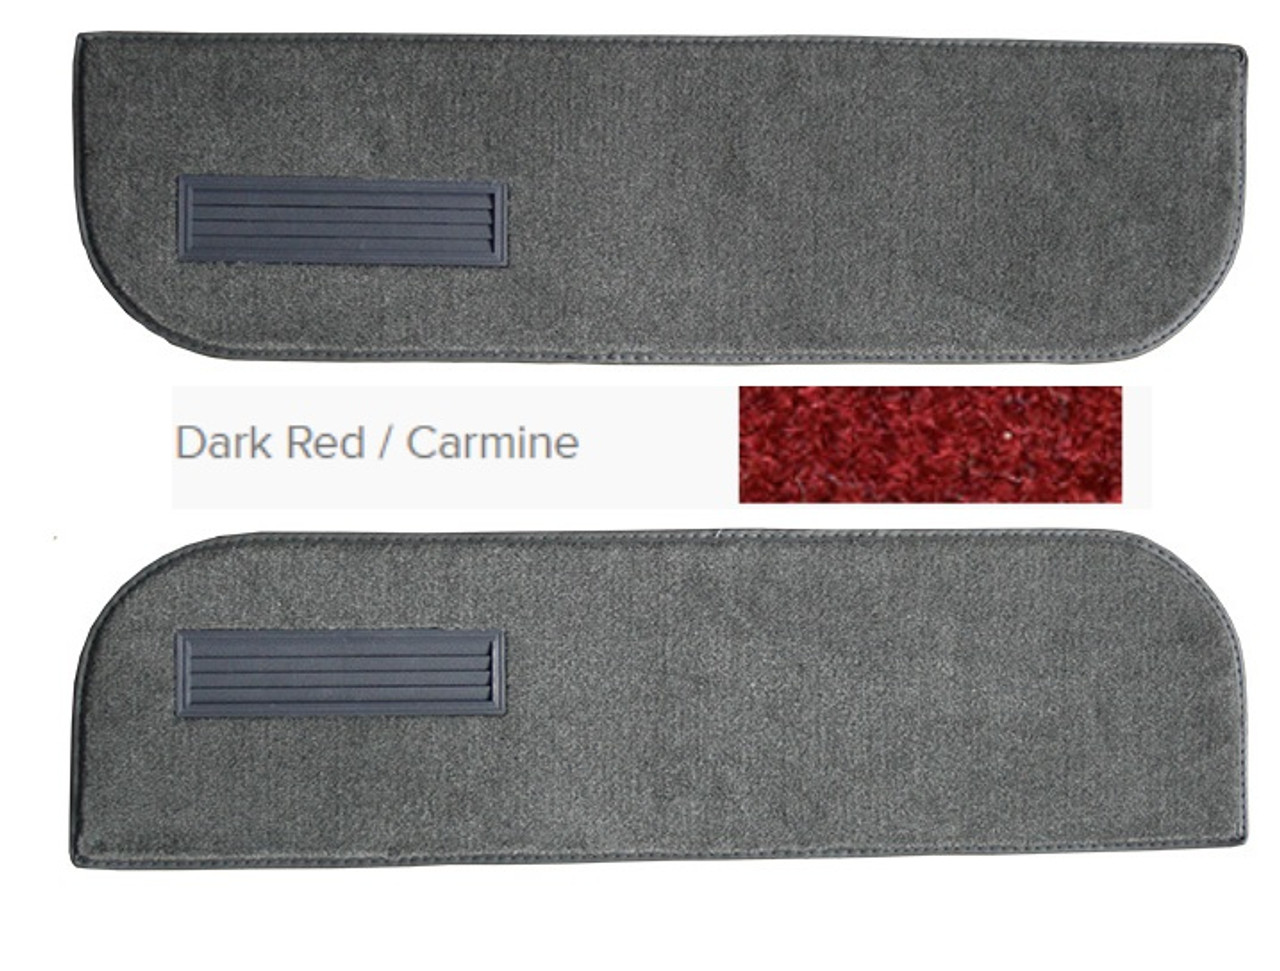 1975-87 PU, 75-91 Blazer, Jimmy Suburban Dark Red Door Panel Carpets Insert on Cardboard with vents.